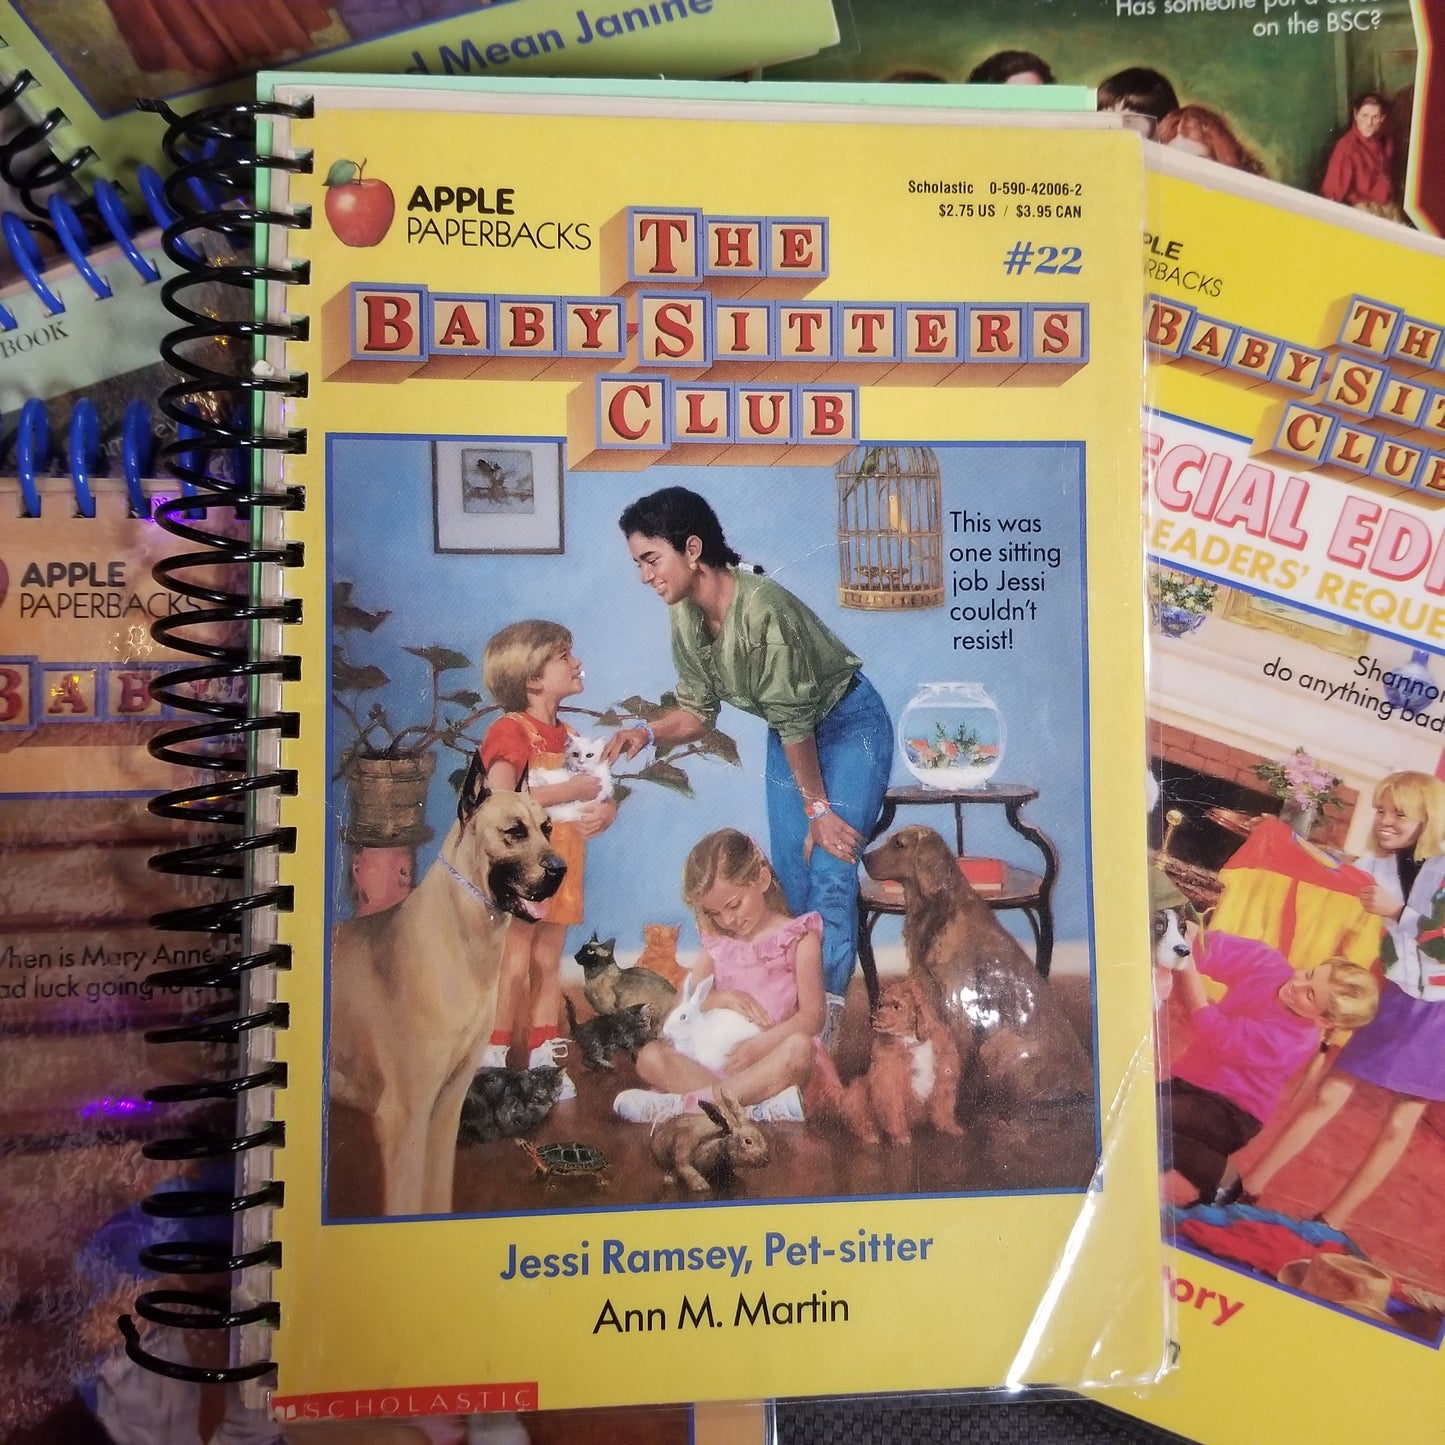 The Babysitter's Club Book Sketchbooks / NOTEBOOKs